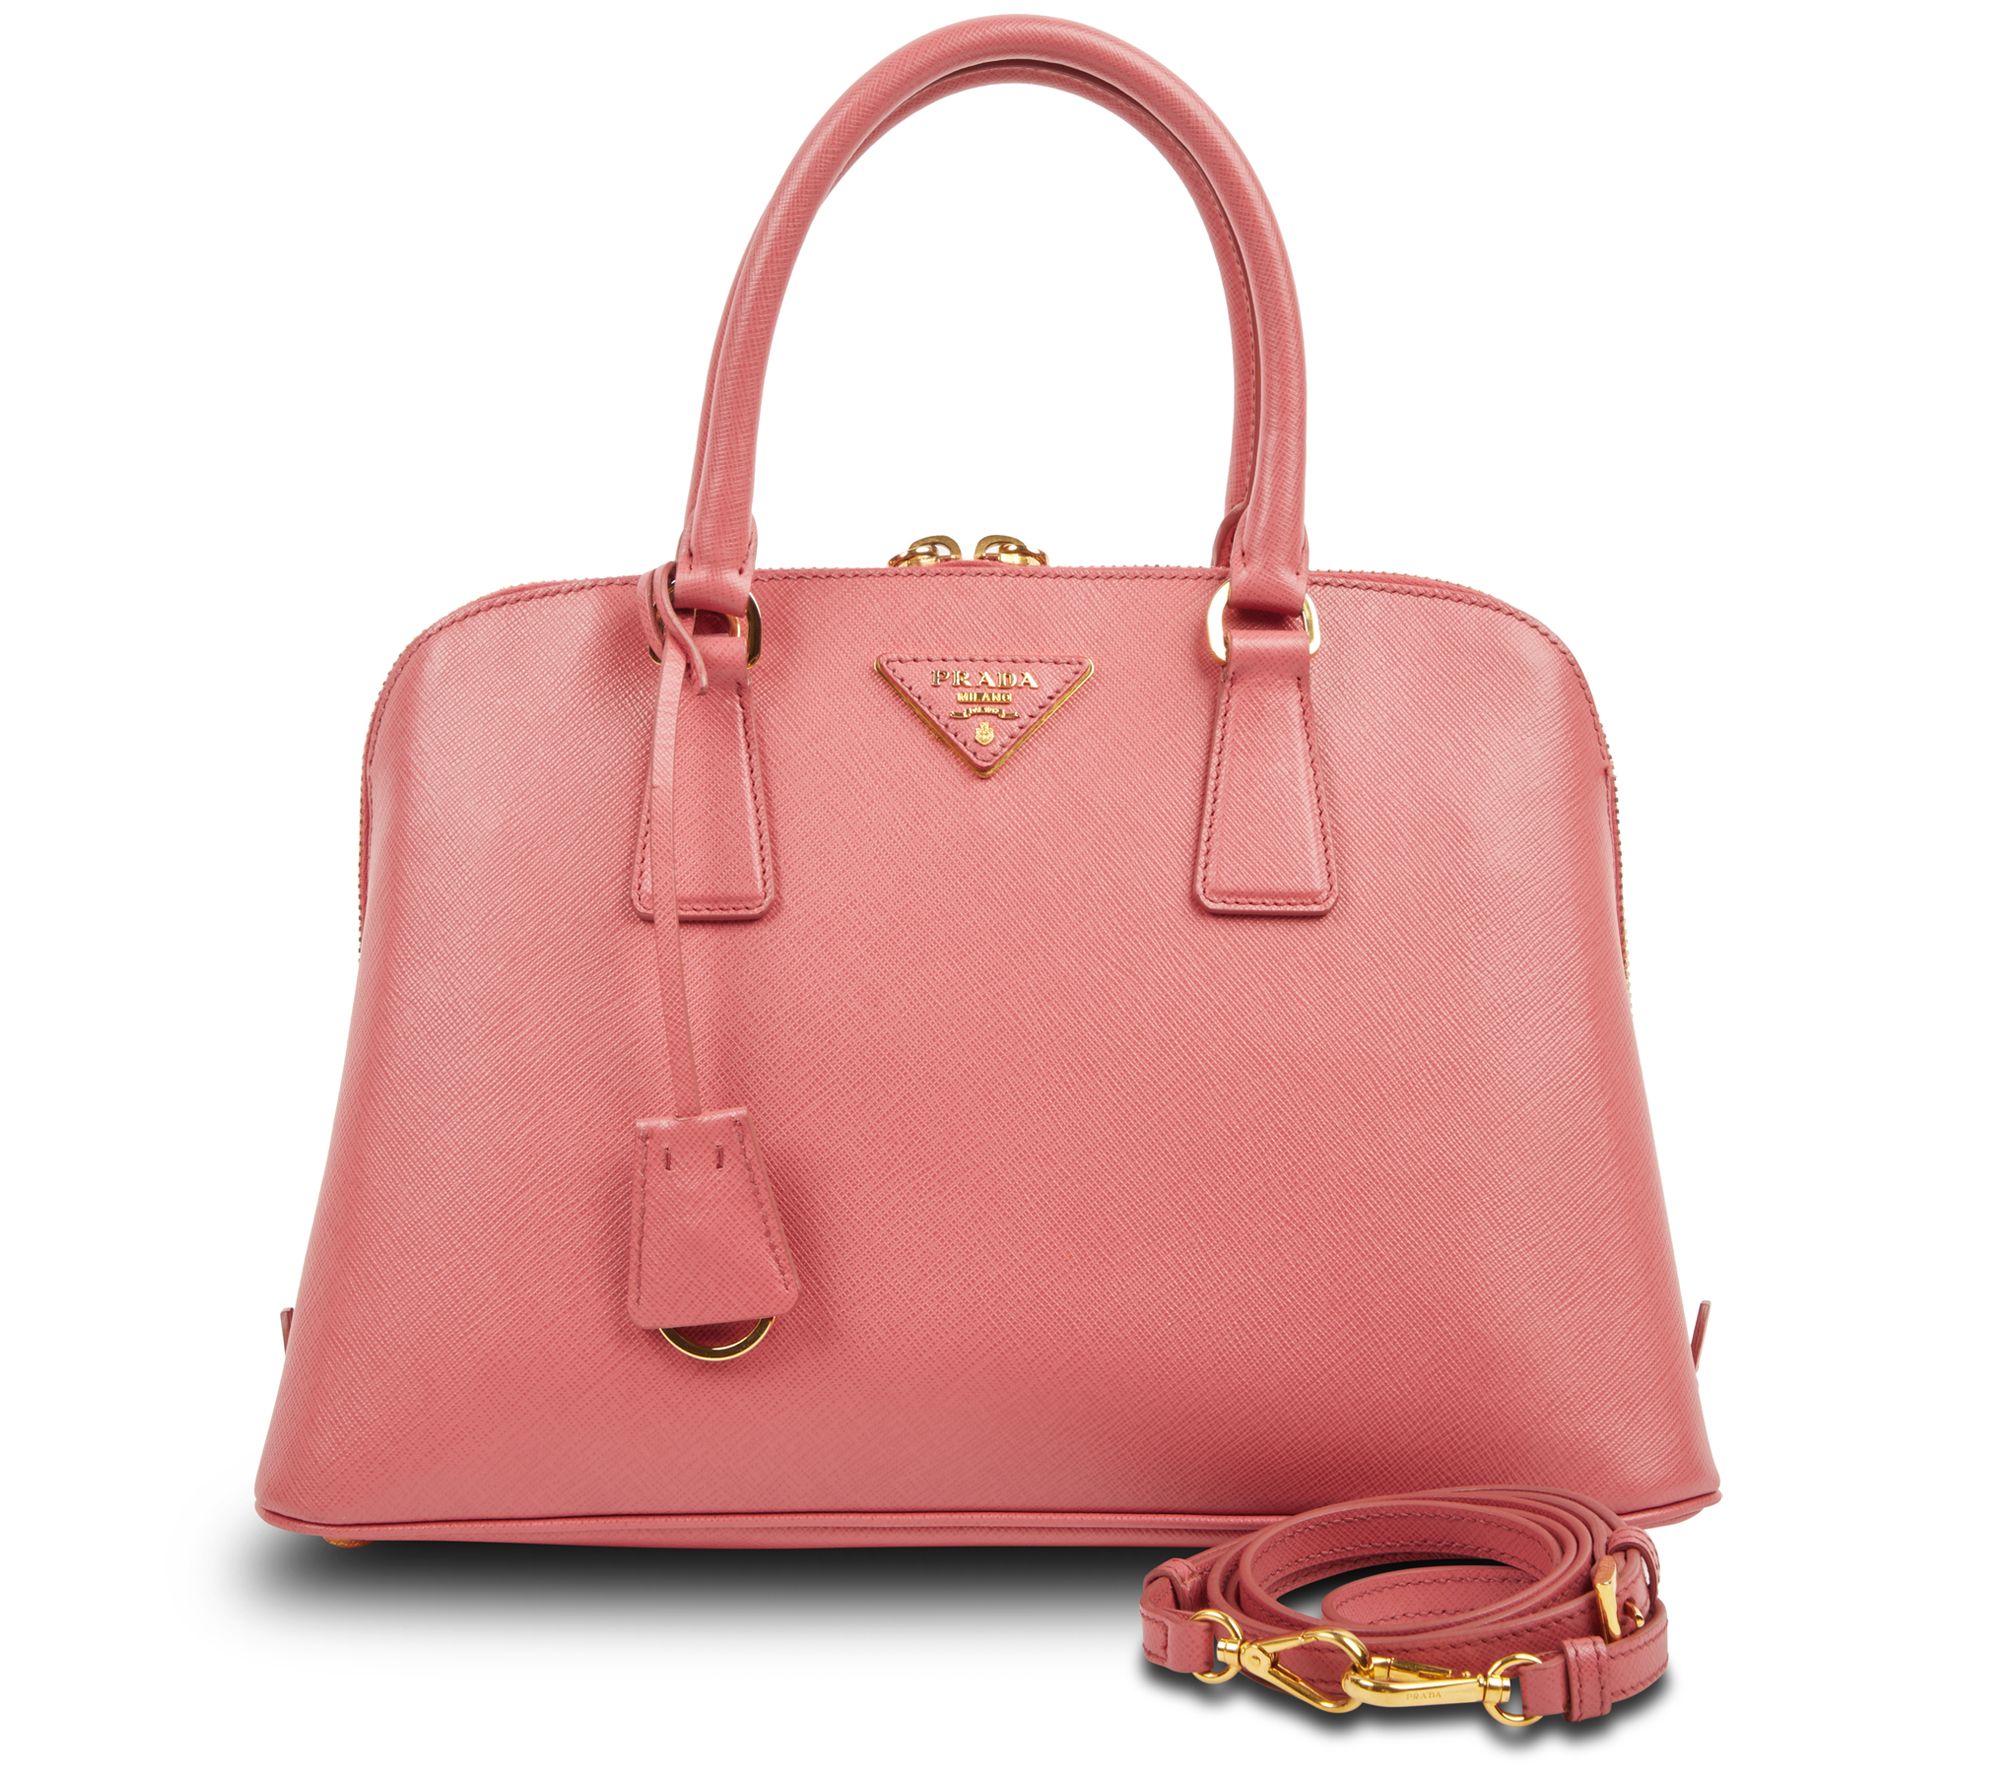 Prada Promenade Bag Saffiano Leather Mini Pink